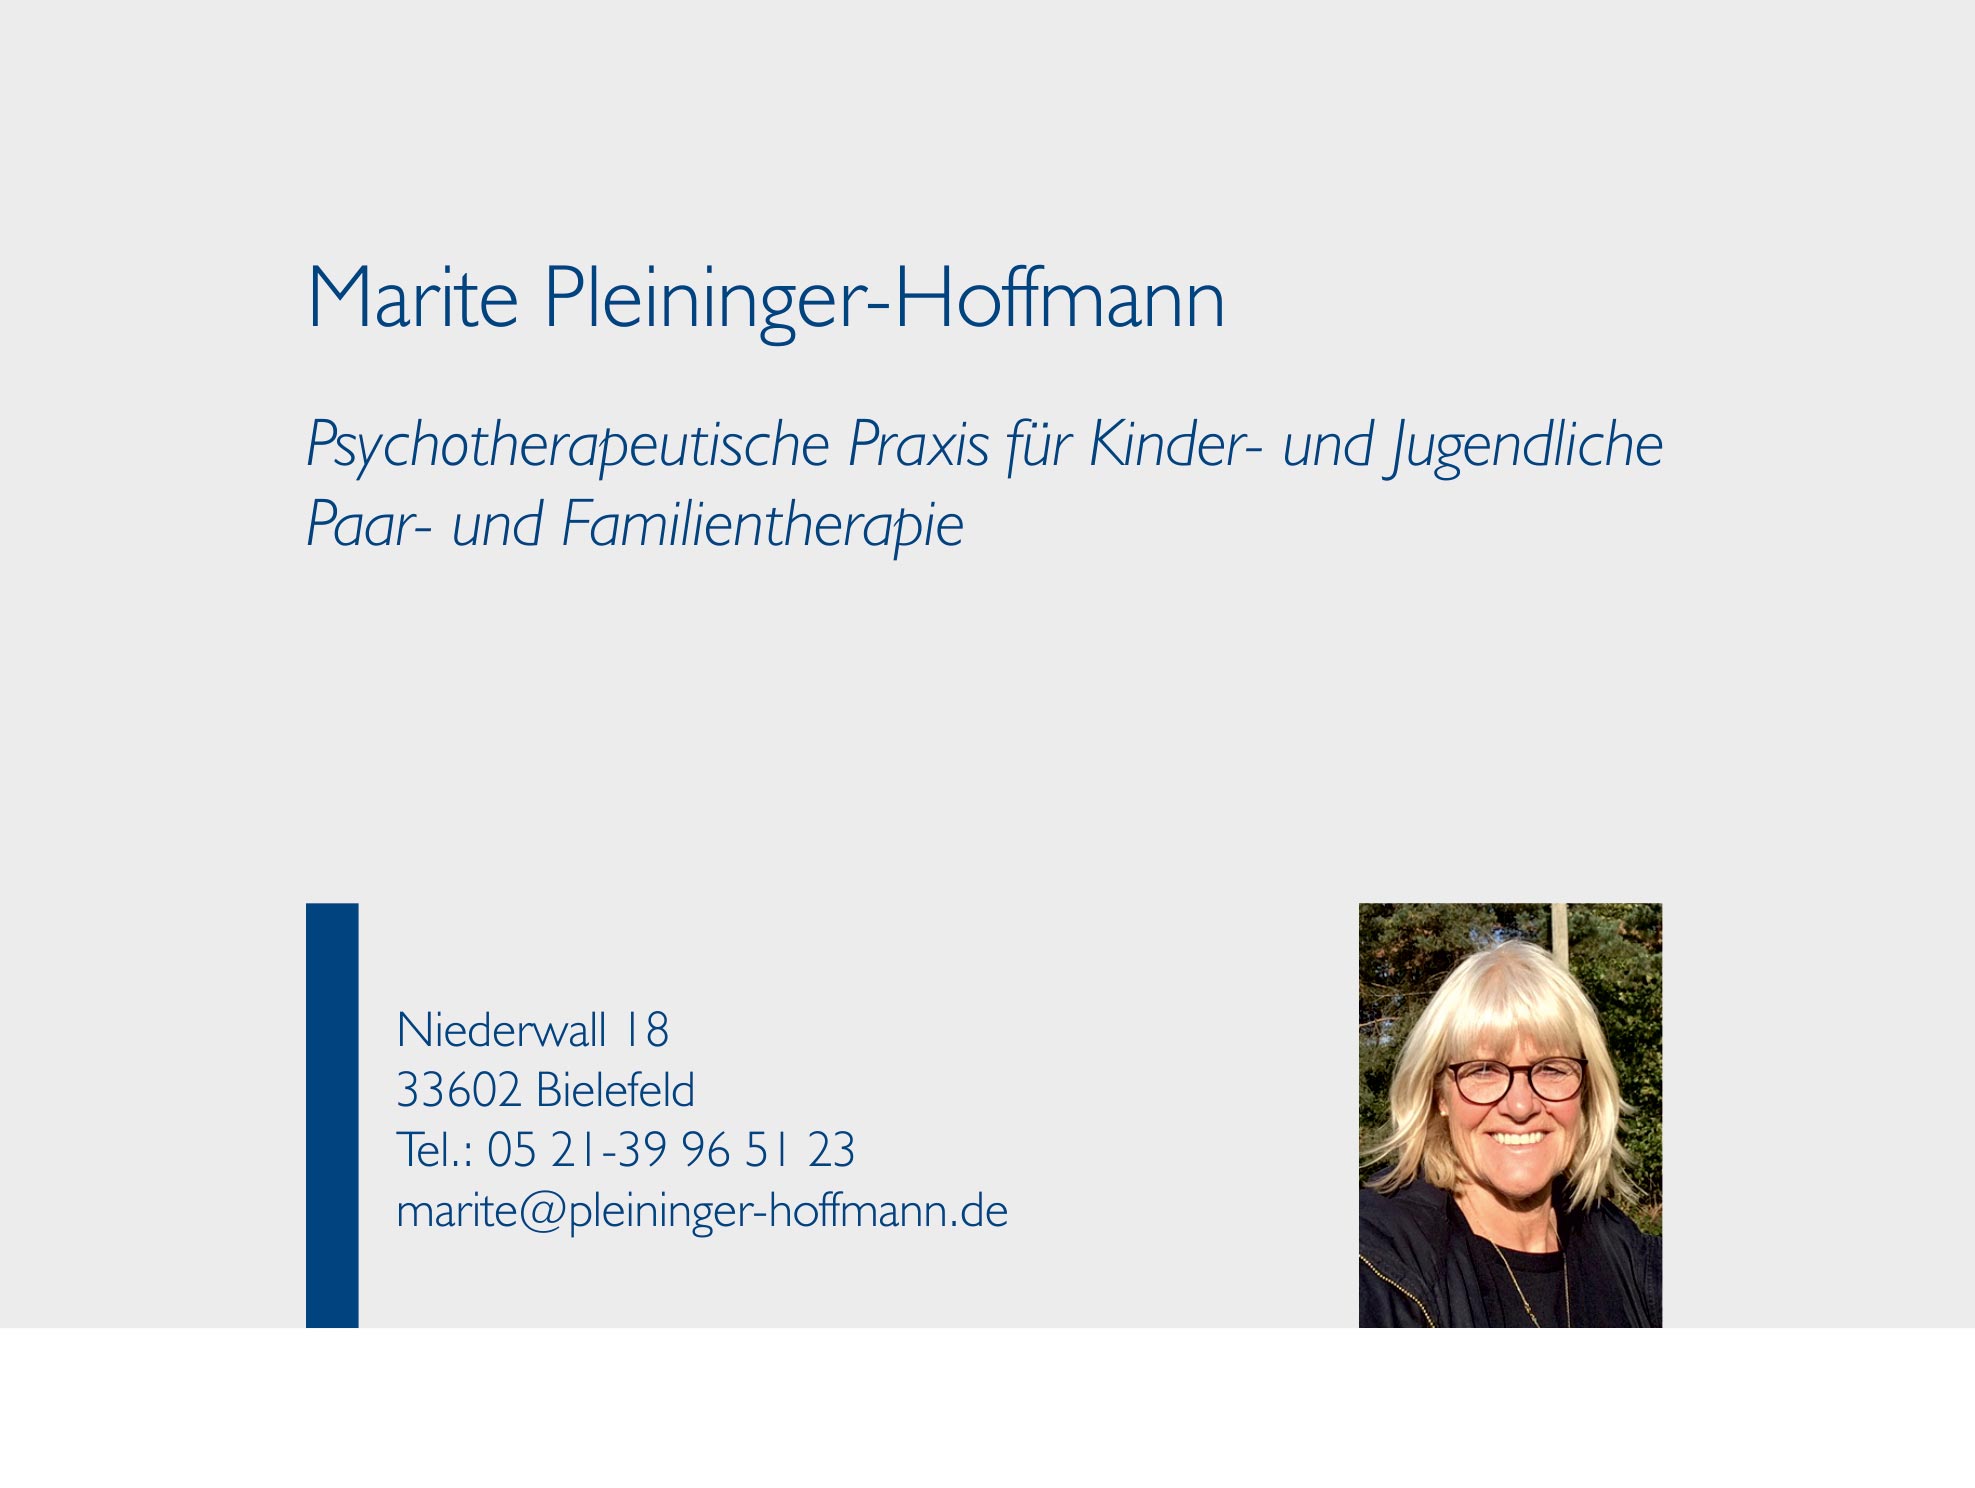 Marite Pleininger-Hoffmann